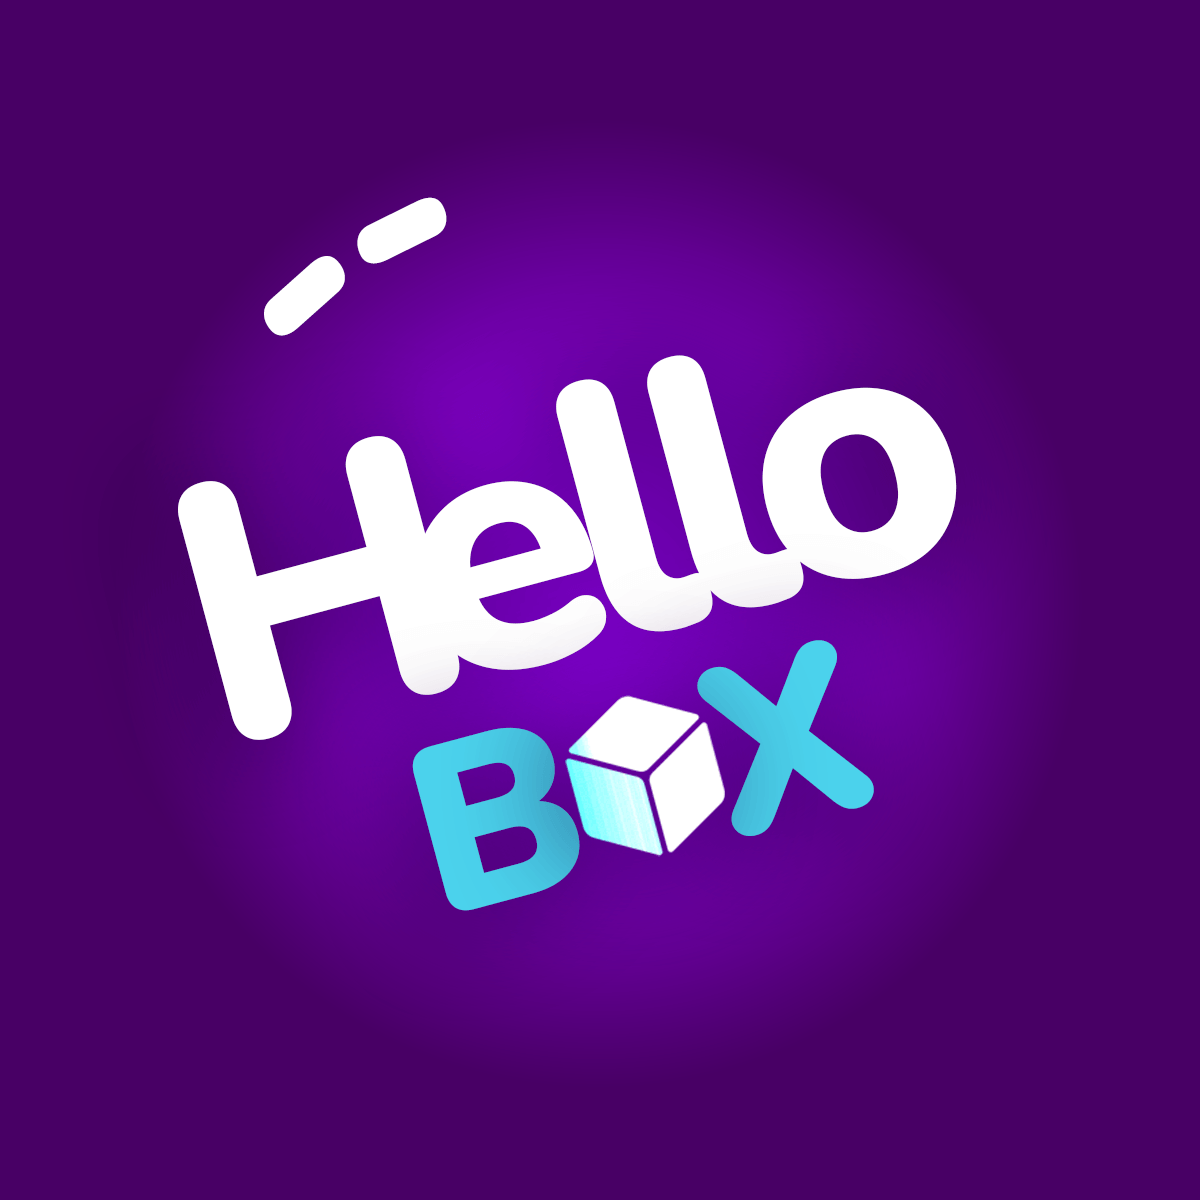 HelloBox